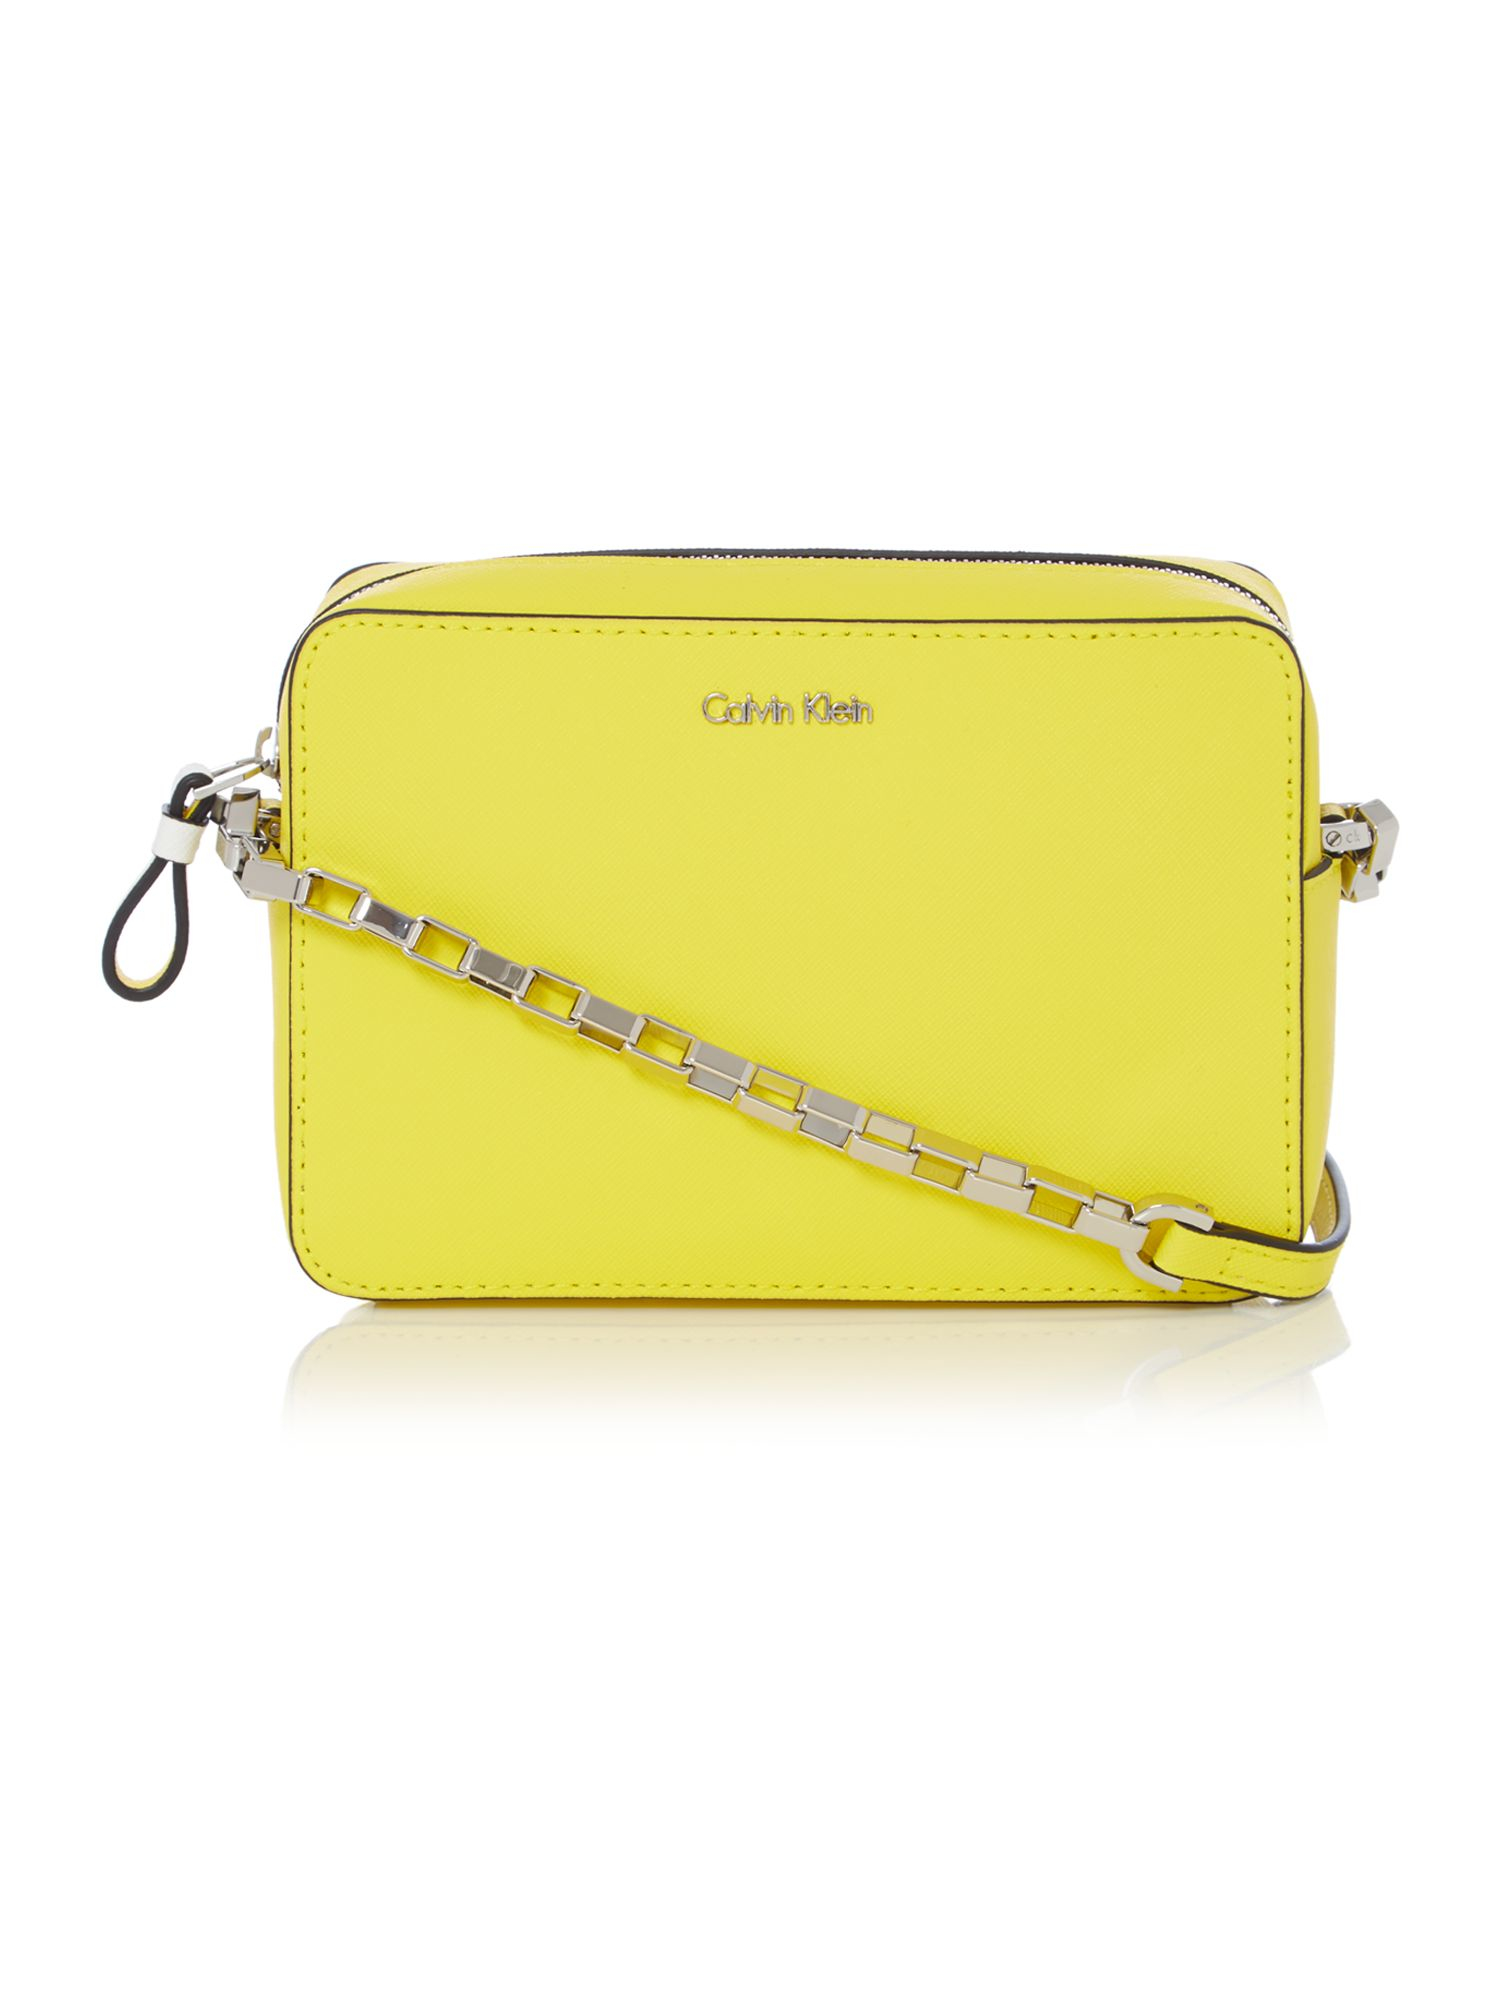 Calvin Klein Sofie Yellow Small Crossbody Bag - Lyst